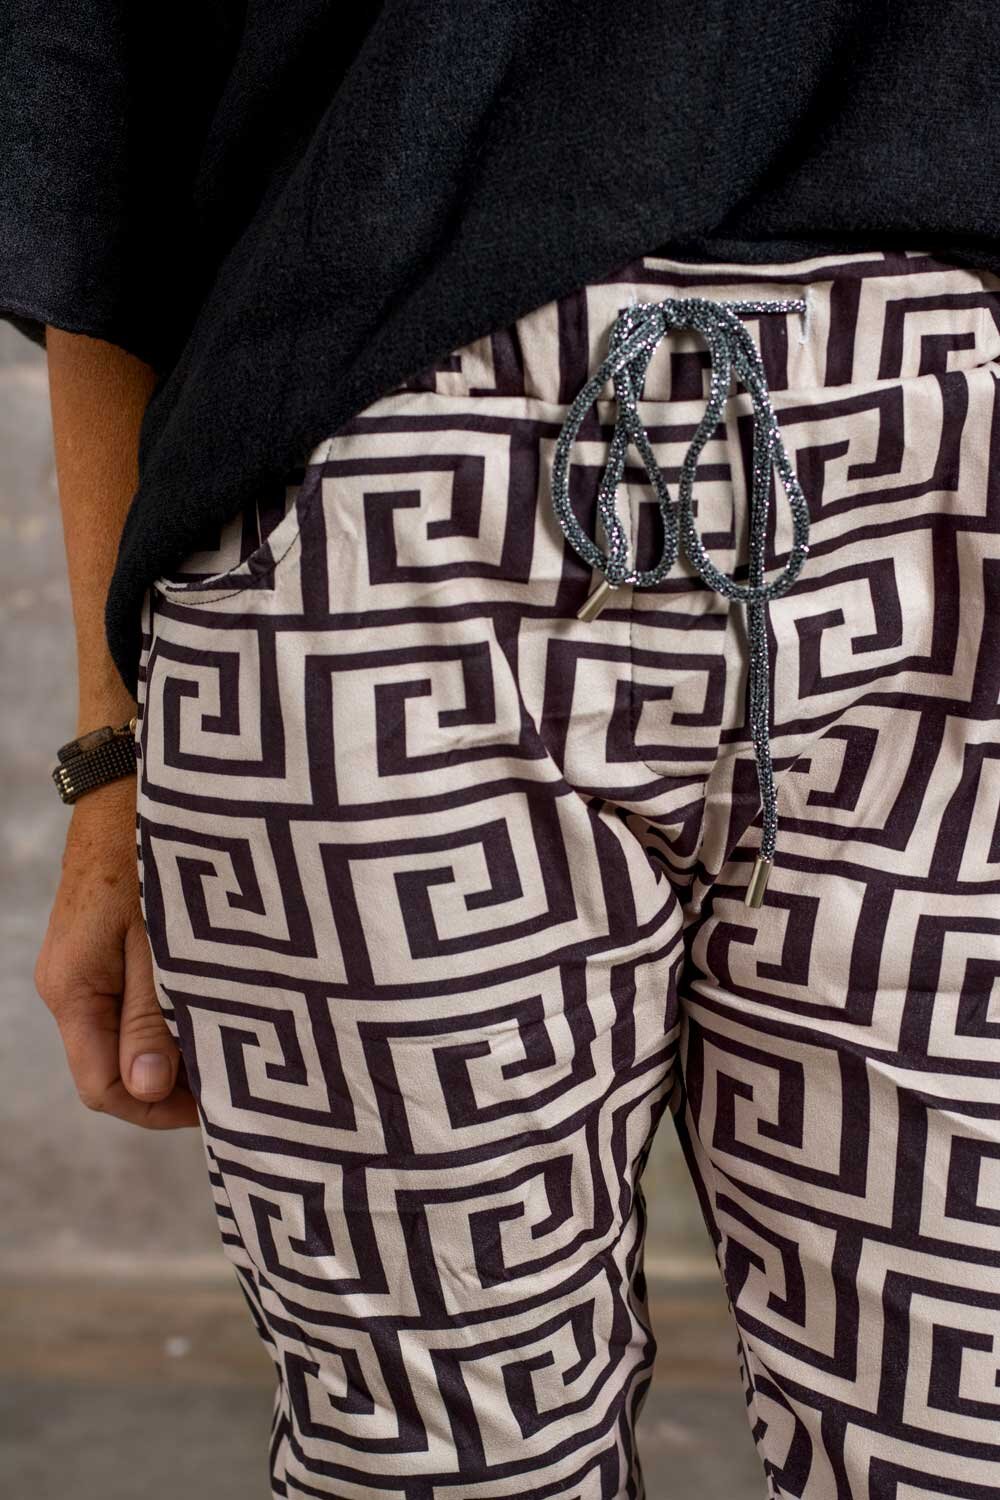 Stretchy trousers - Greek pattern - Beige/Black